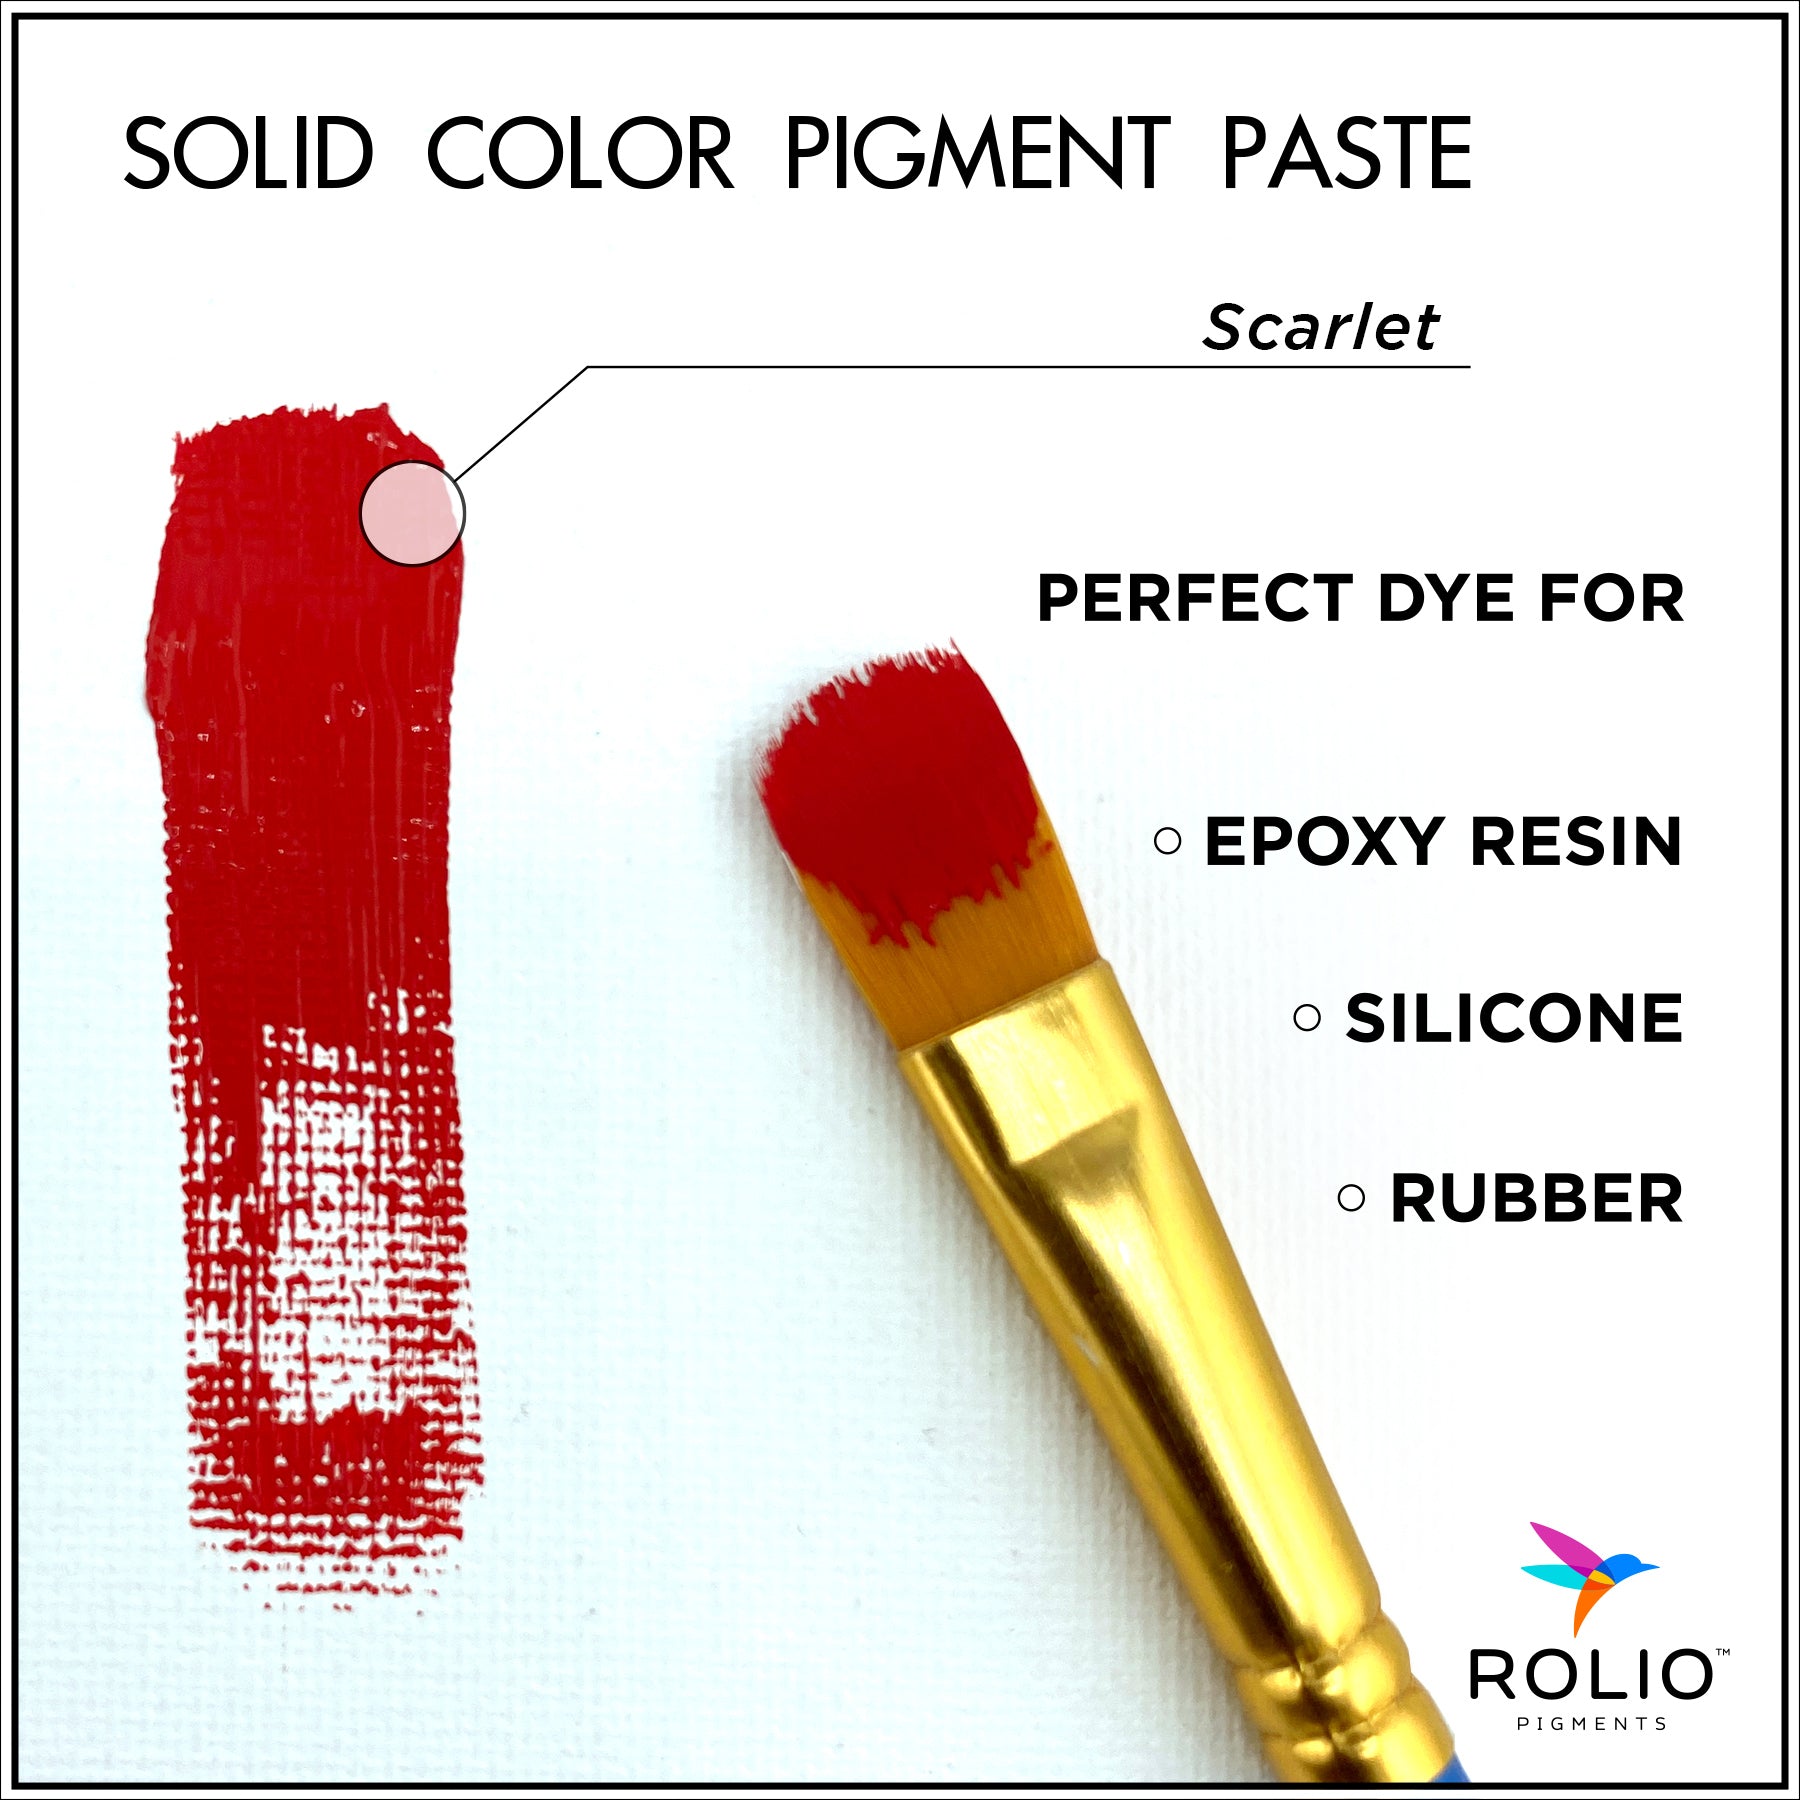 03-Rolio-Scarlet-Resin-Pigment-Paste-Description.jpg